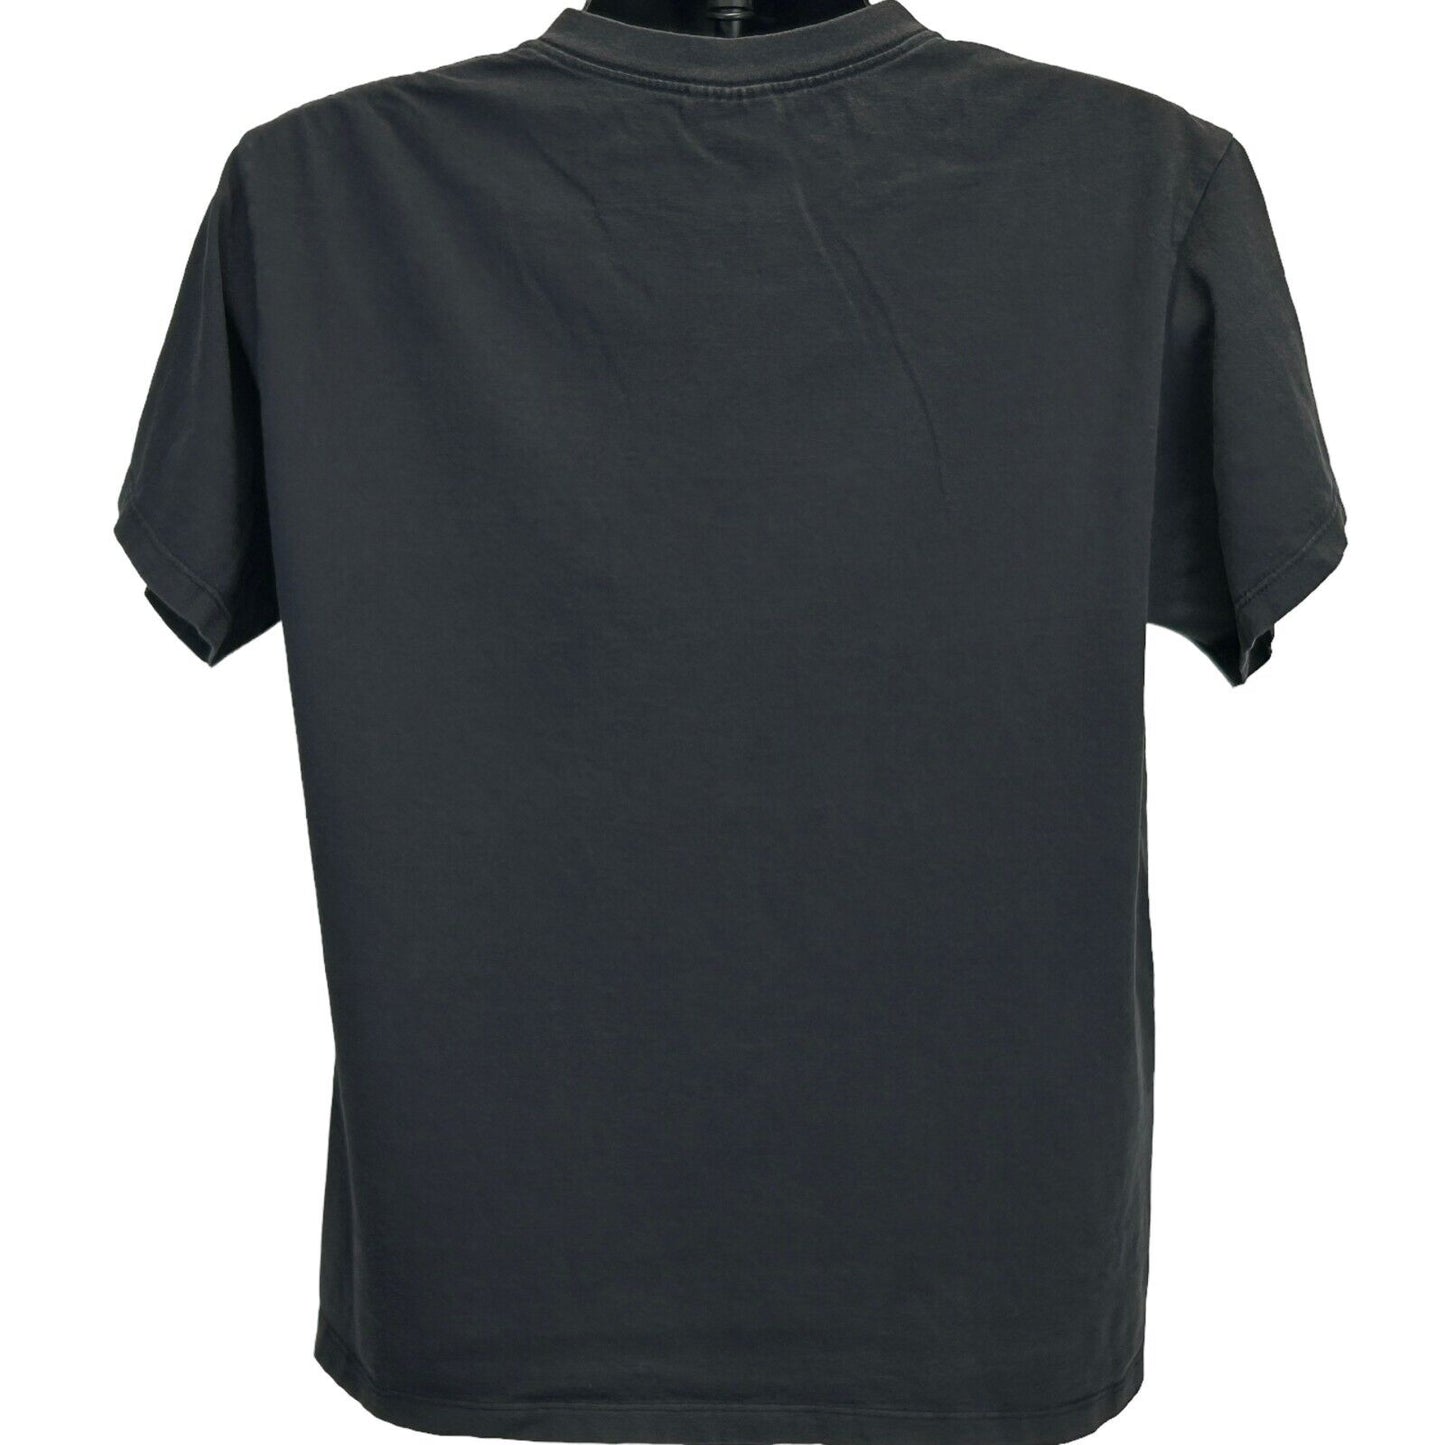 Adidas Vintage 90s camiseta manga corta negro hecho en EE.UU. camiseta mediana